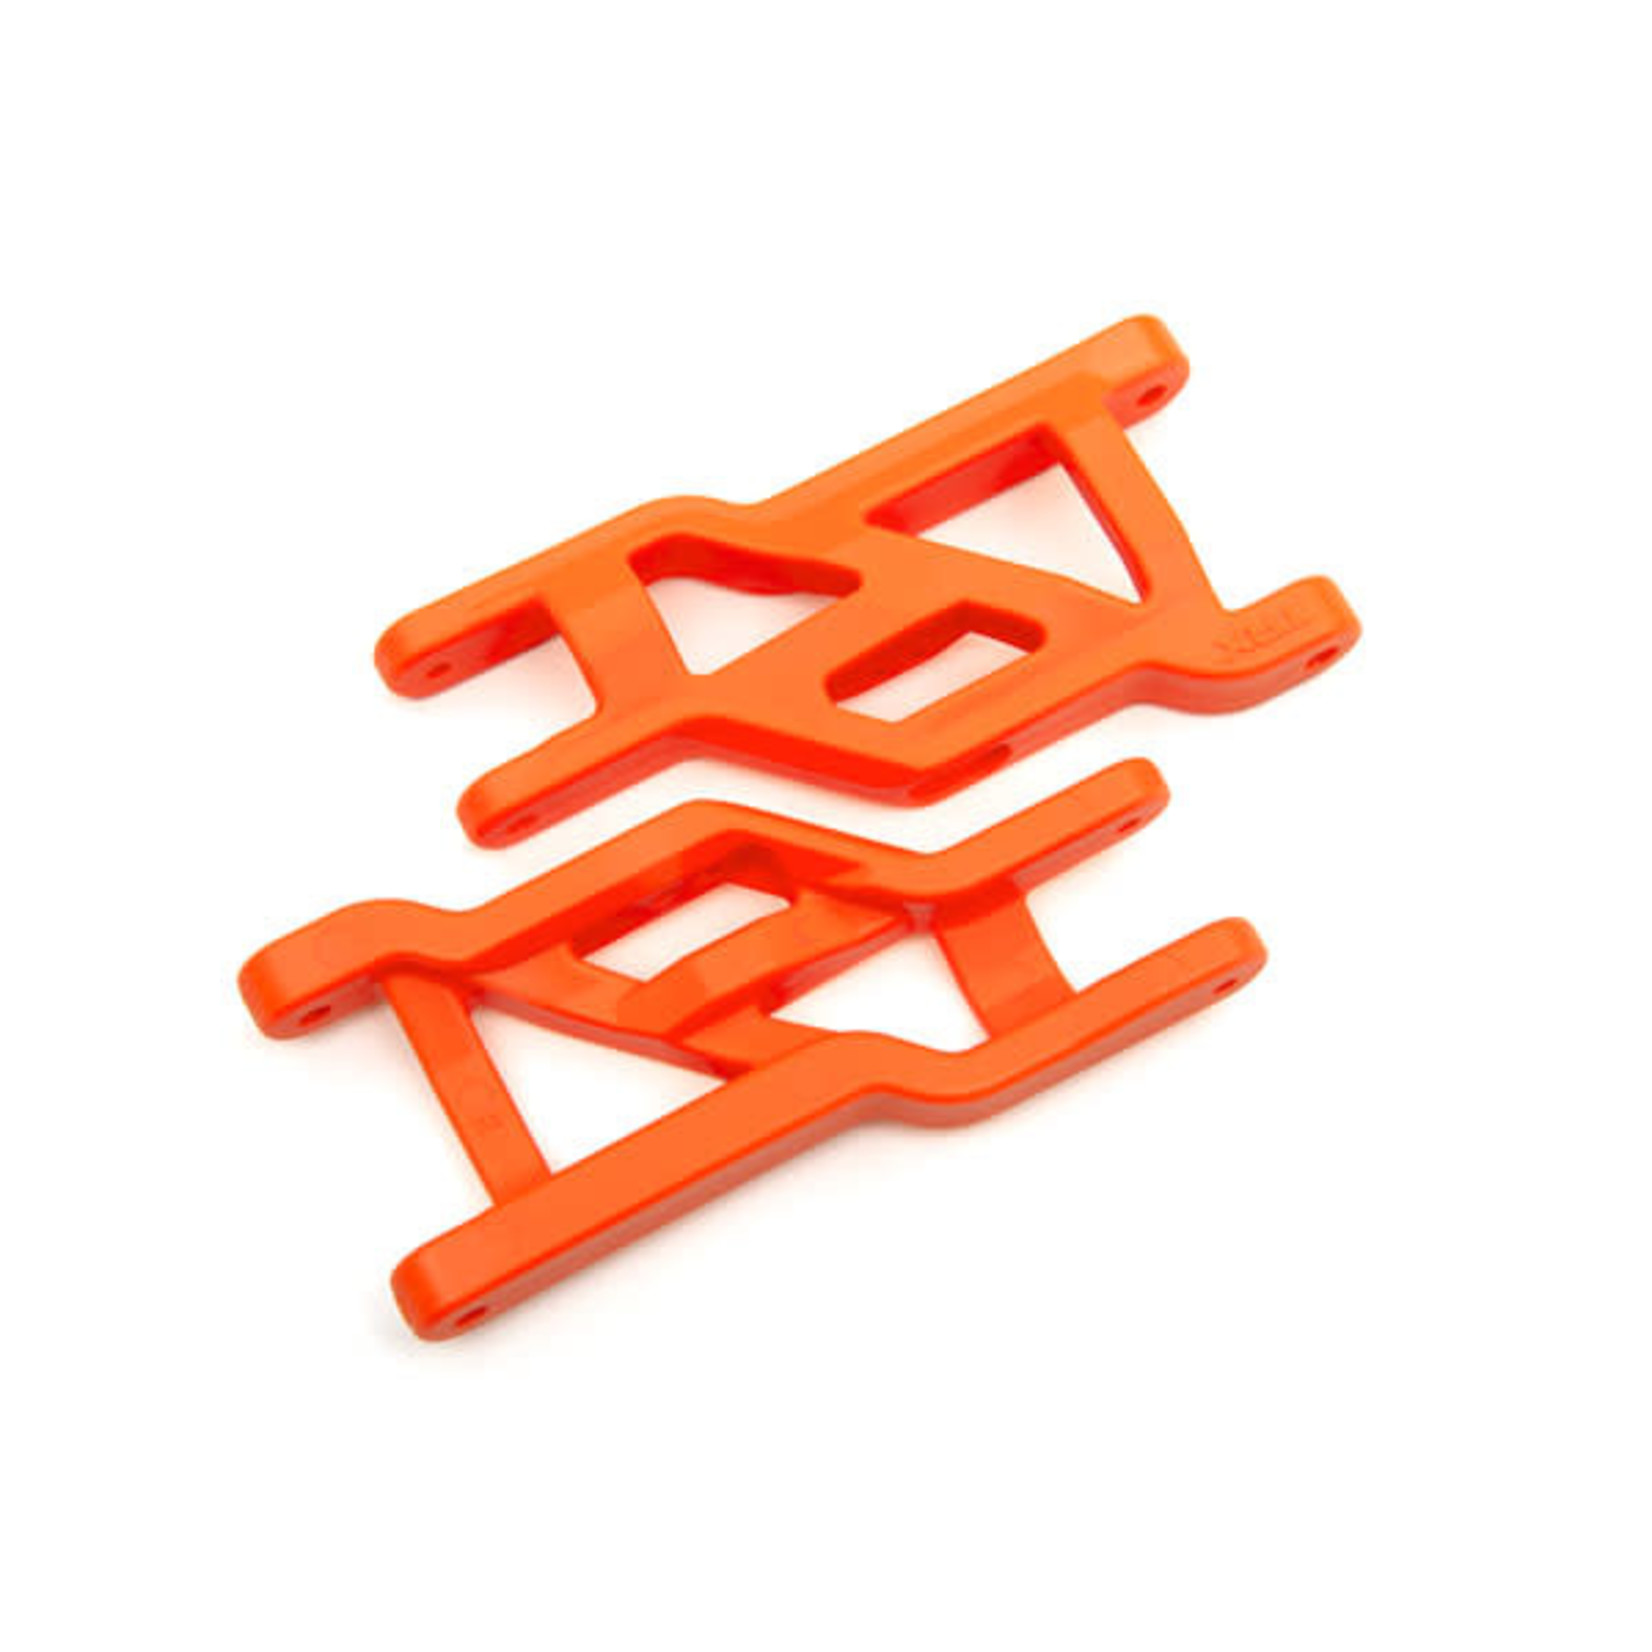 Traxxas Traxxas HD Cold Weather Front Suspension Arm Set (Orange) (2) #3631T